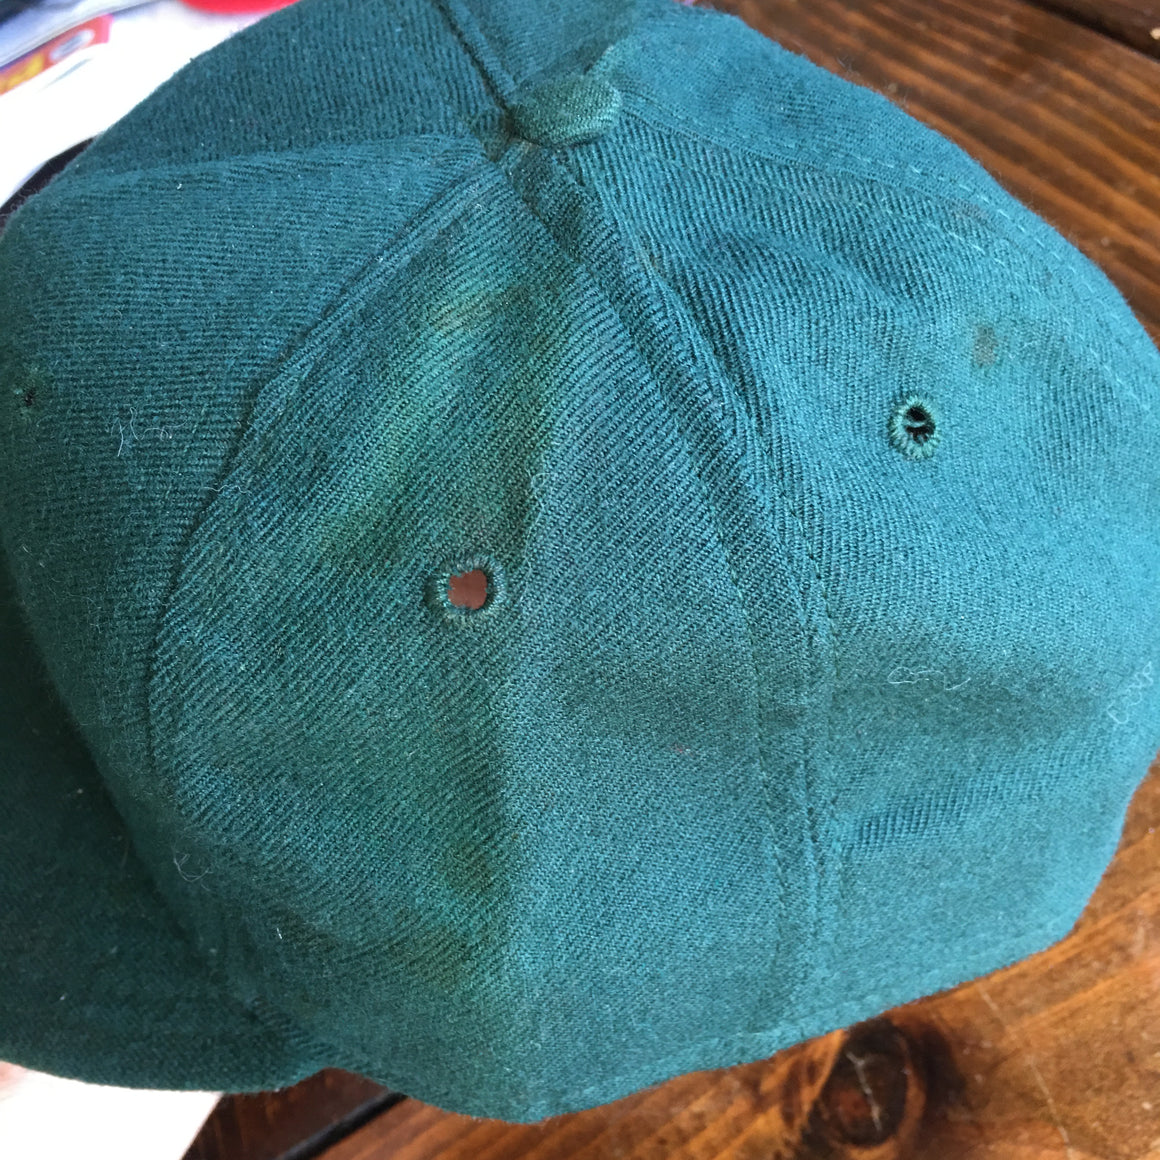 Seattle SuperSonics hat by New Era